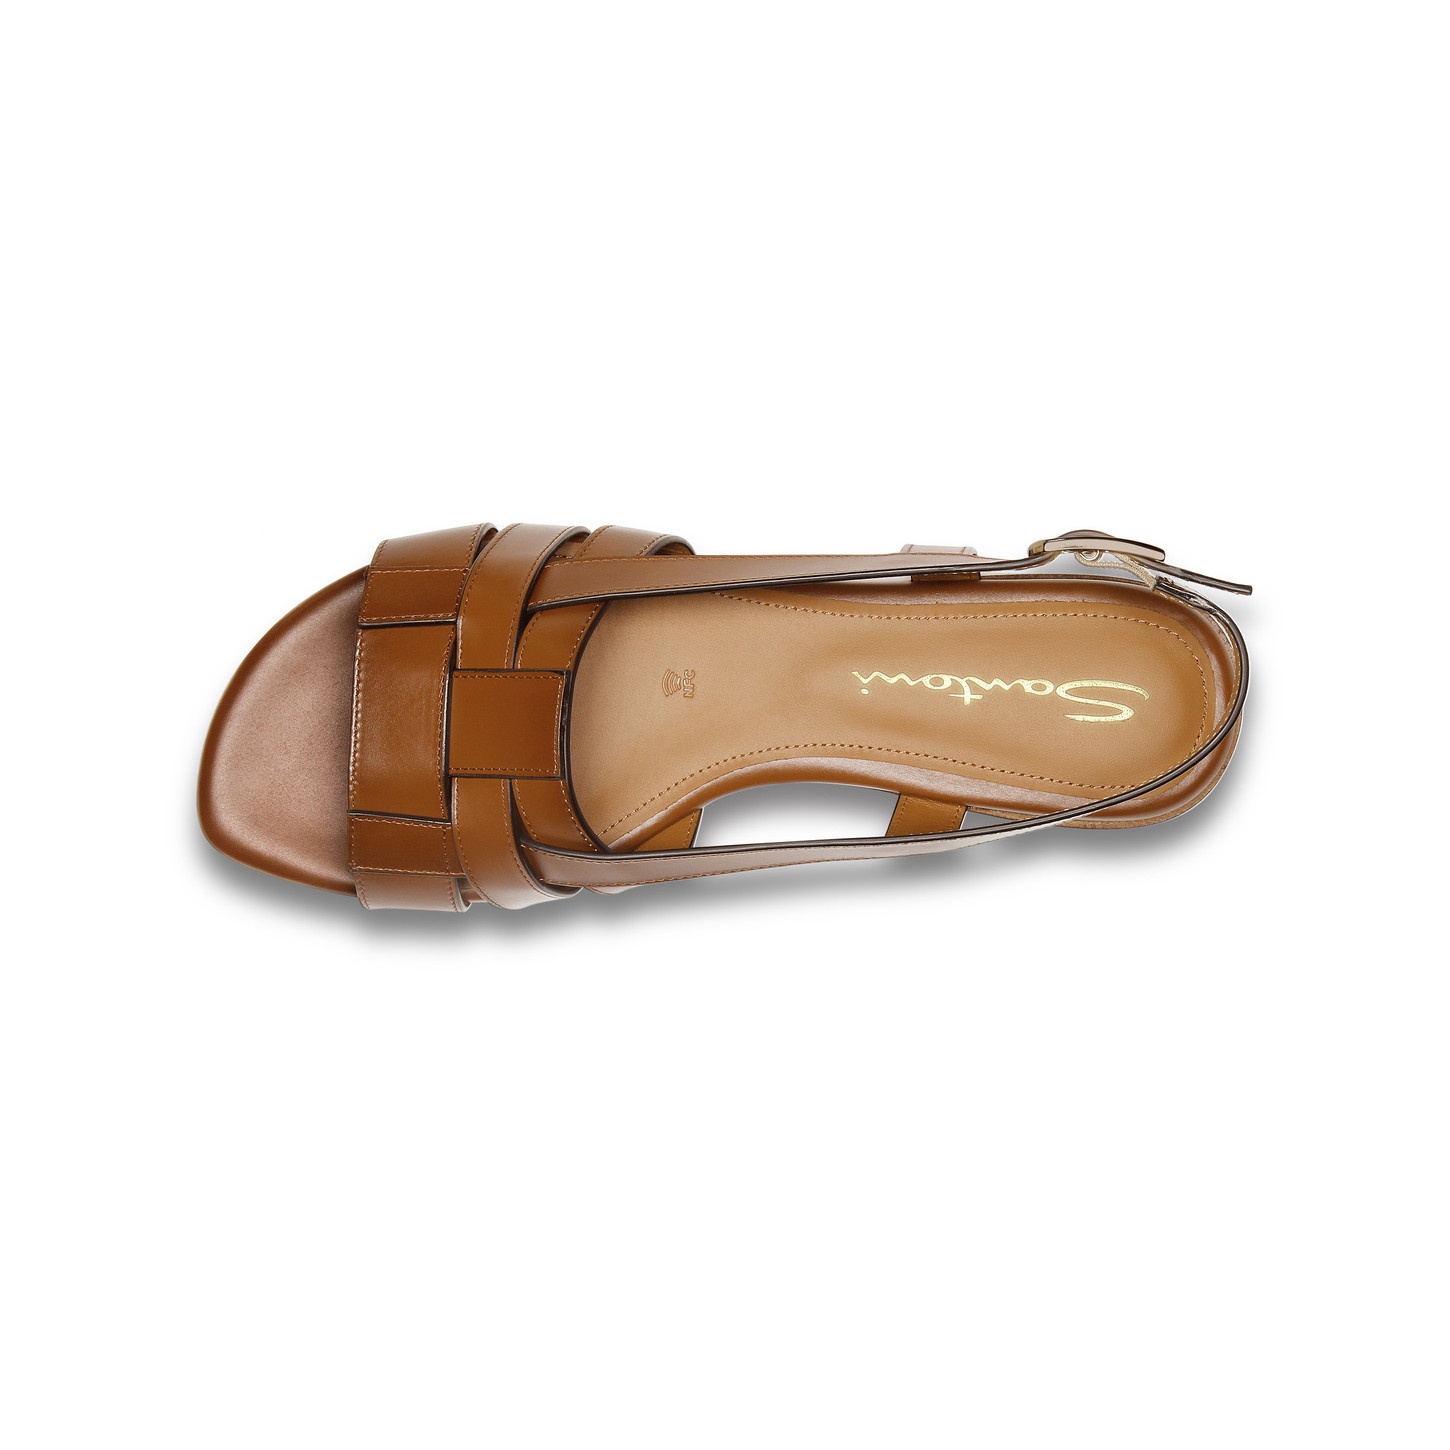 Women's brown leather Beyond sandal - 5